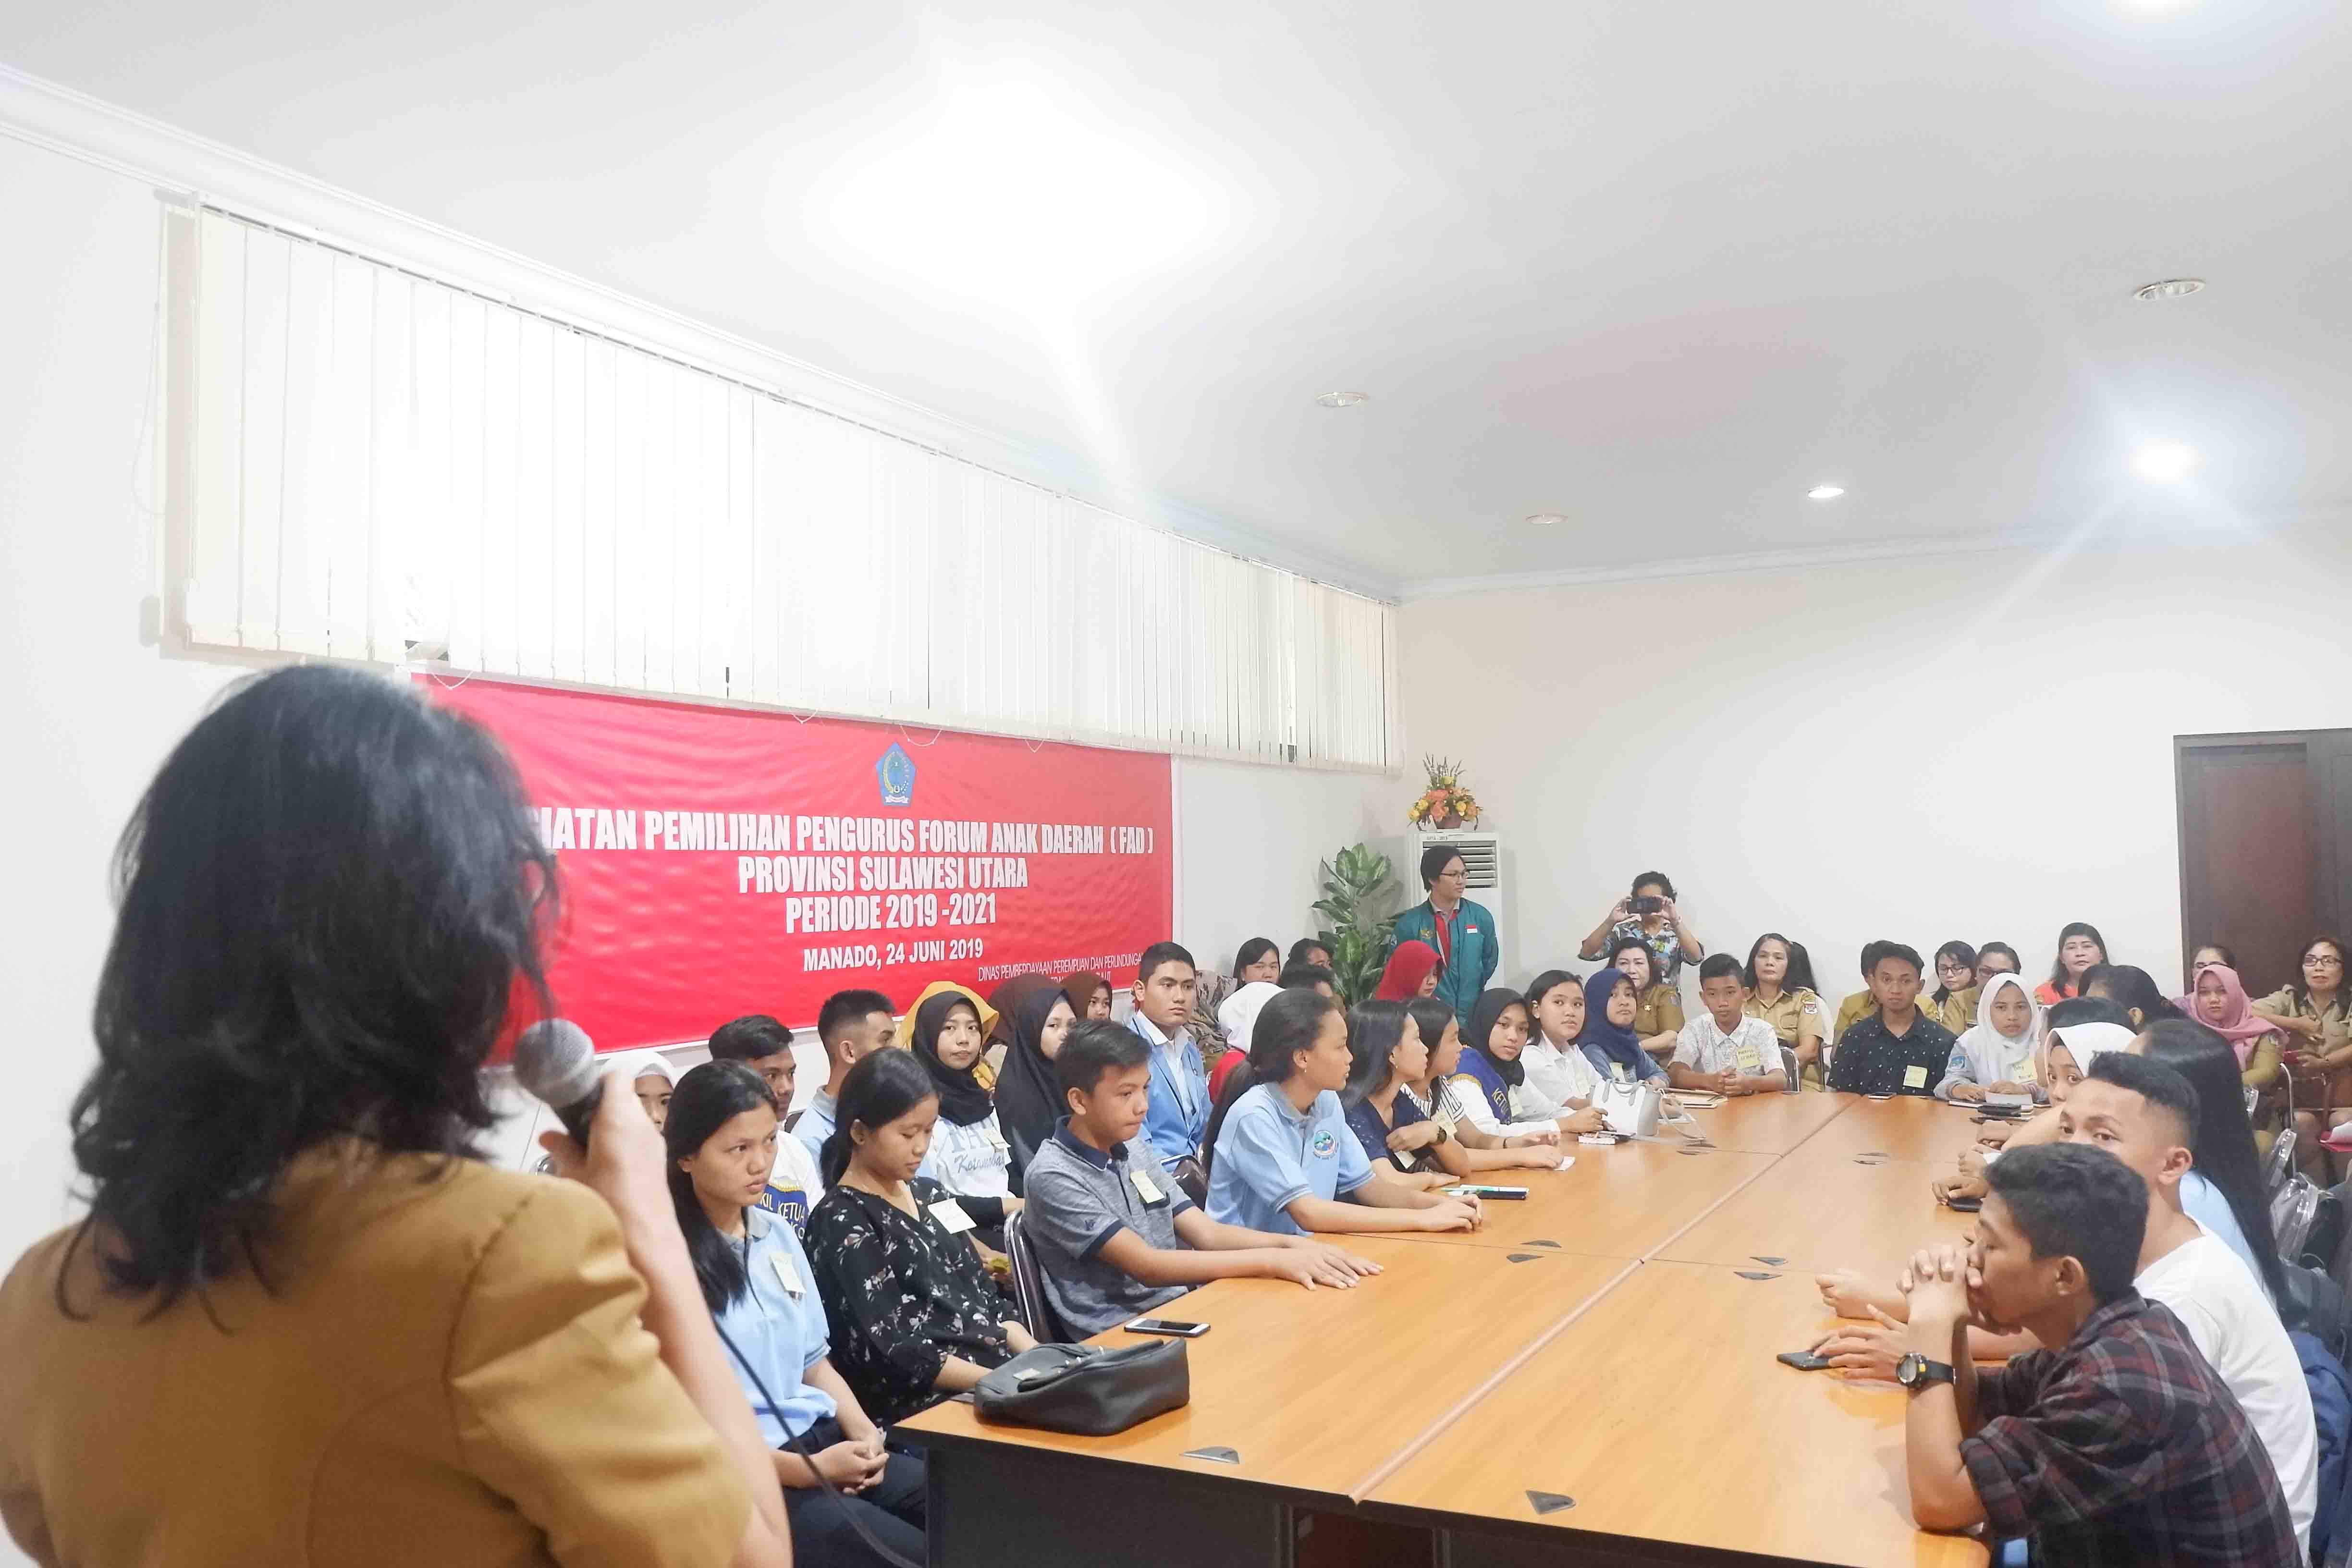 Pemilihan Pengurus (Forum Anak Daerah) FAD Provinsi Sulawesi Utara Periode 2019-2021